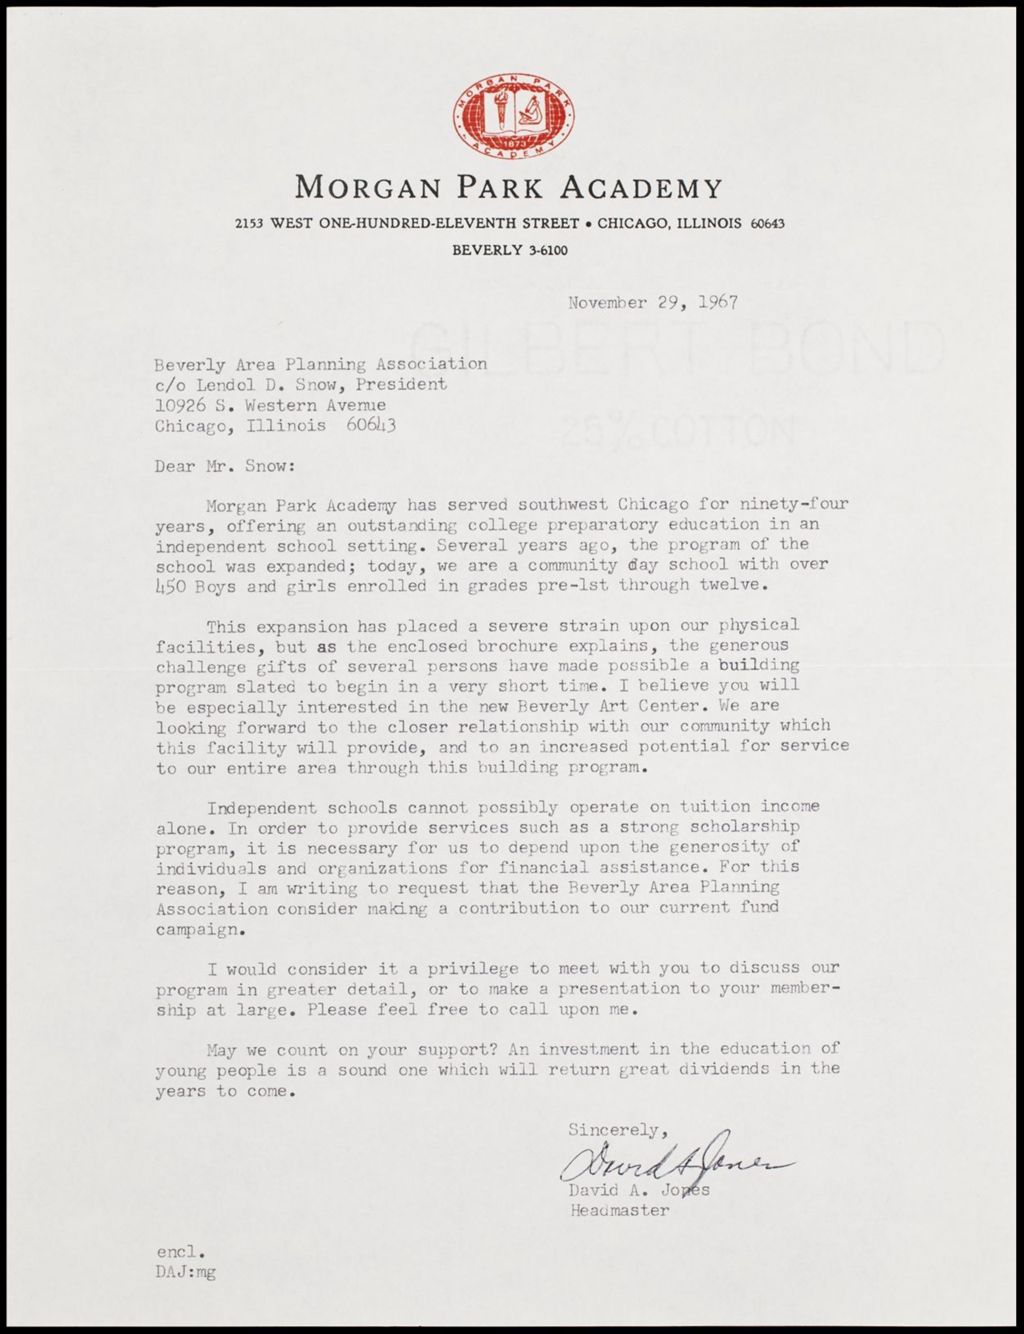 Morgan Park Academy (Folder 141)